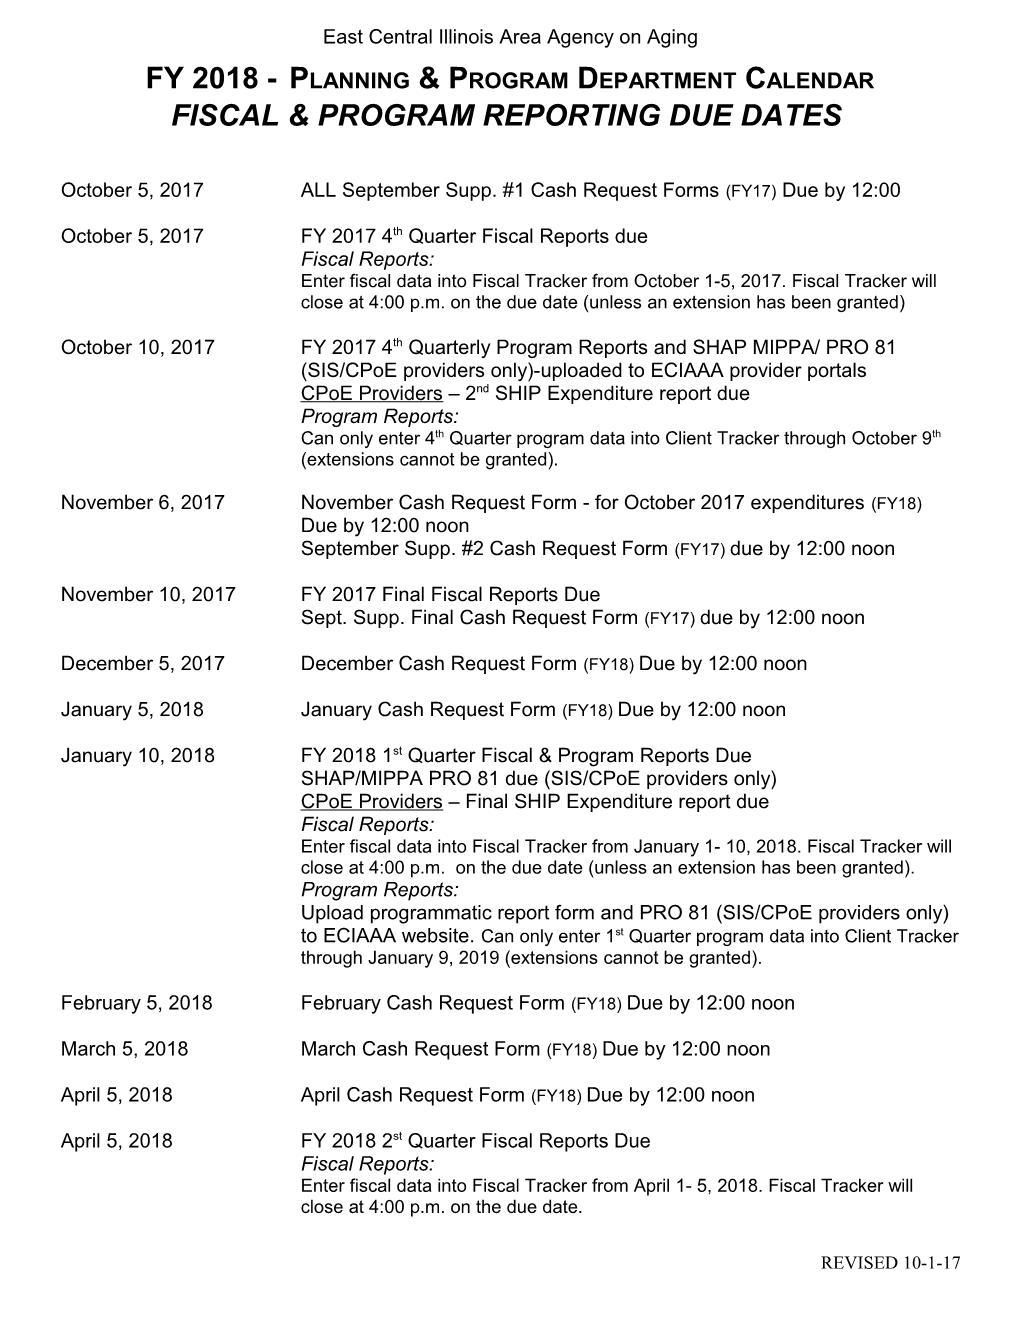 FY 2018 -Planning & Program Department Calendar